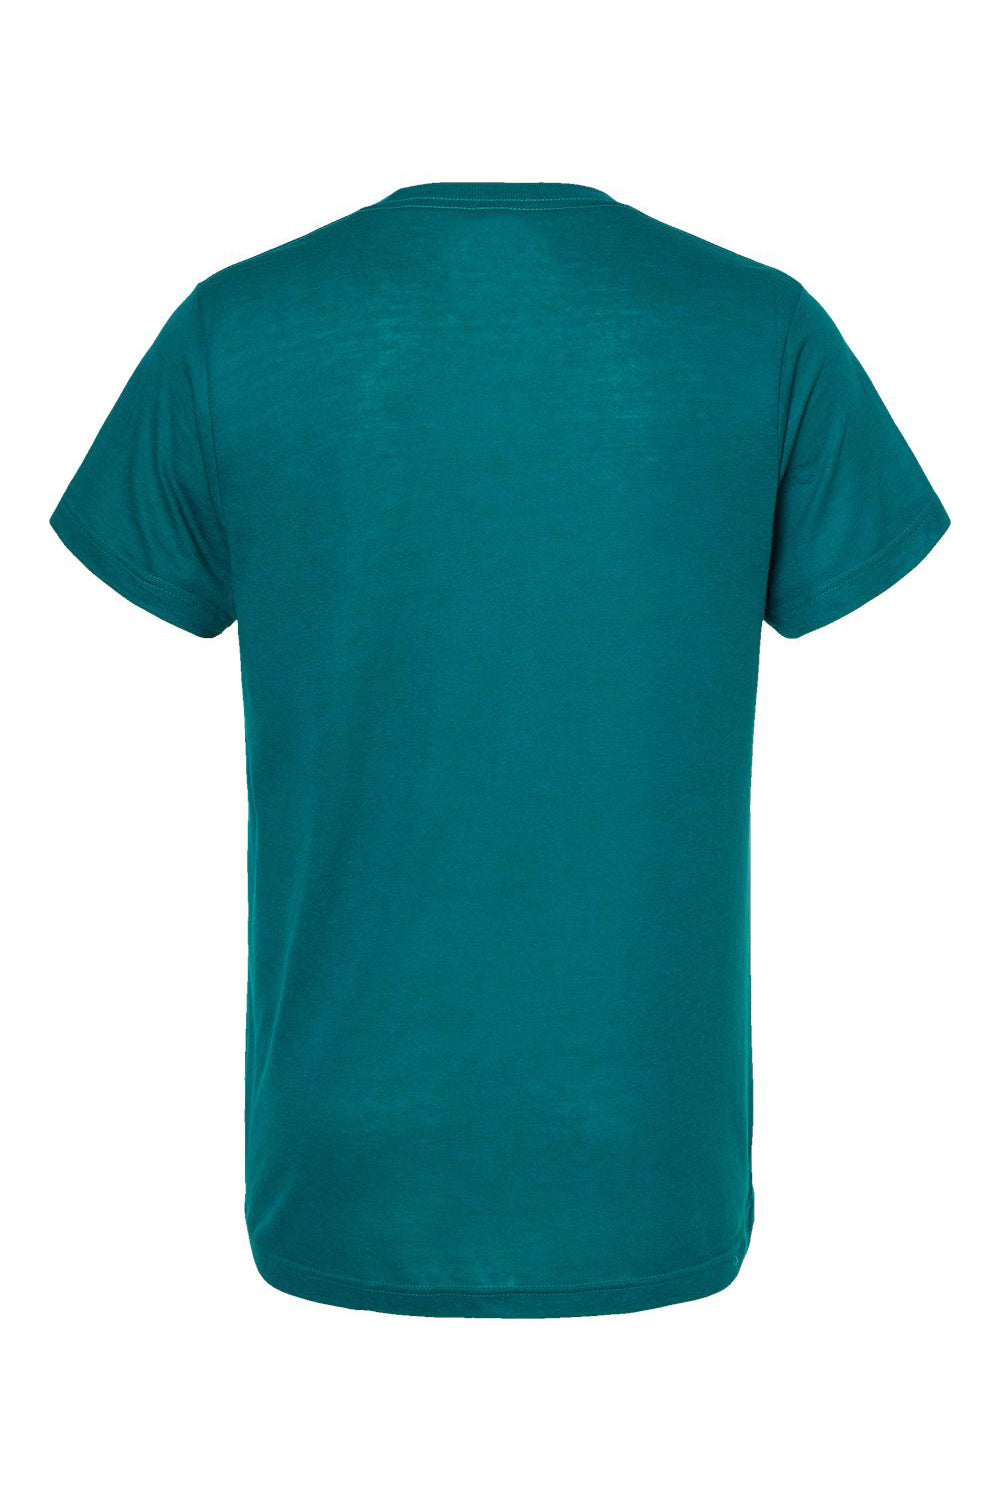 Tultex 254 Mens Short Sleeve Crewneck T-Shirt Jade Green Flat Back